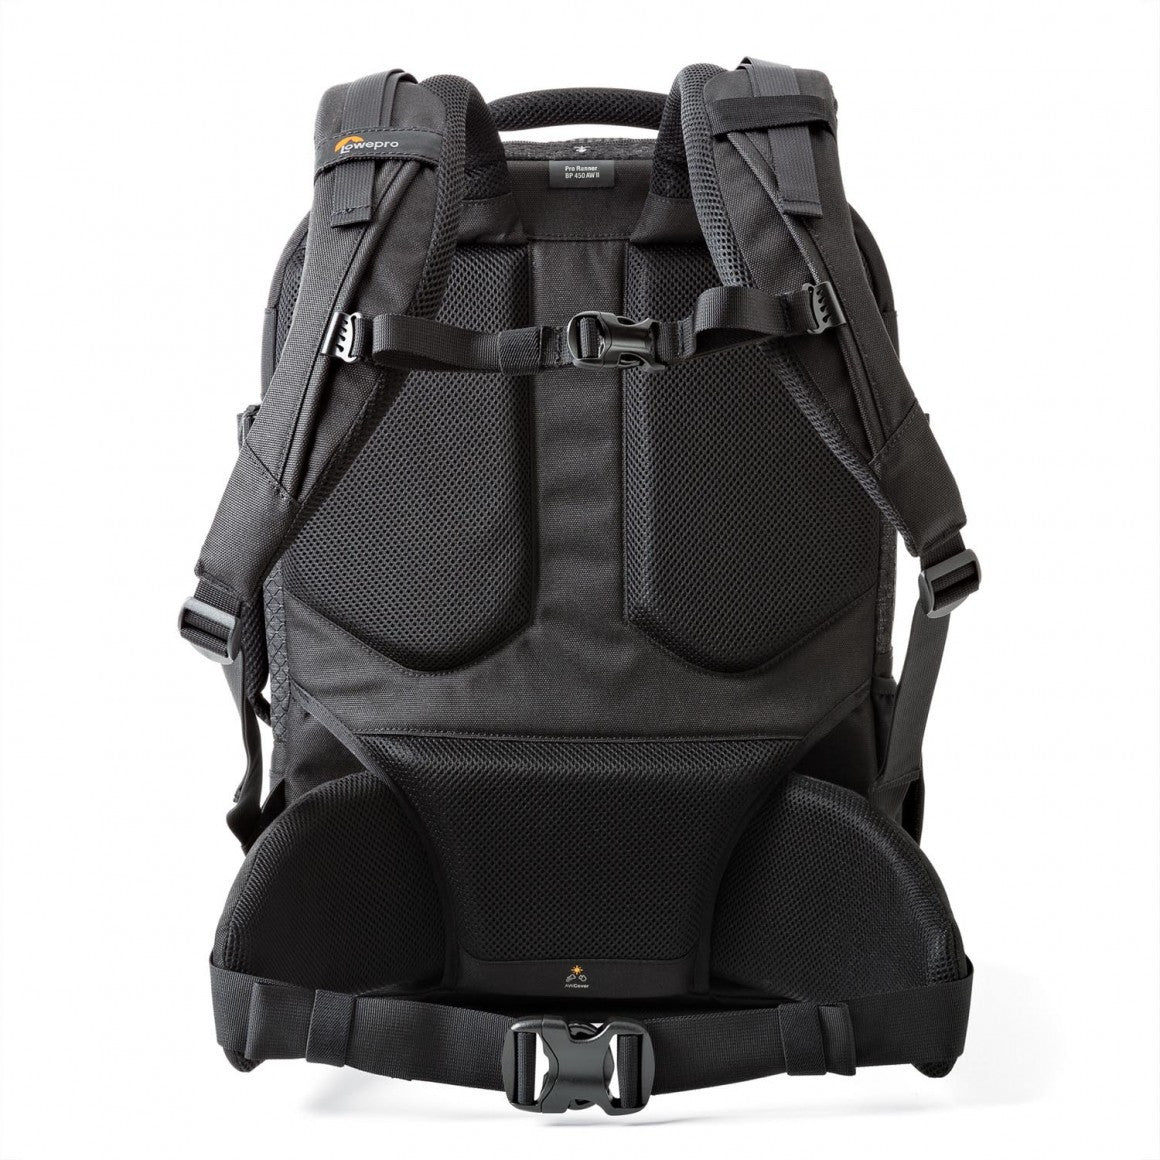 Lowepro Pro Runner 450 AW II Backpack (Black), bags backpacks, Lowepro - Pictureline  - 3